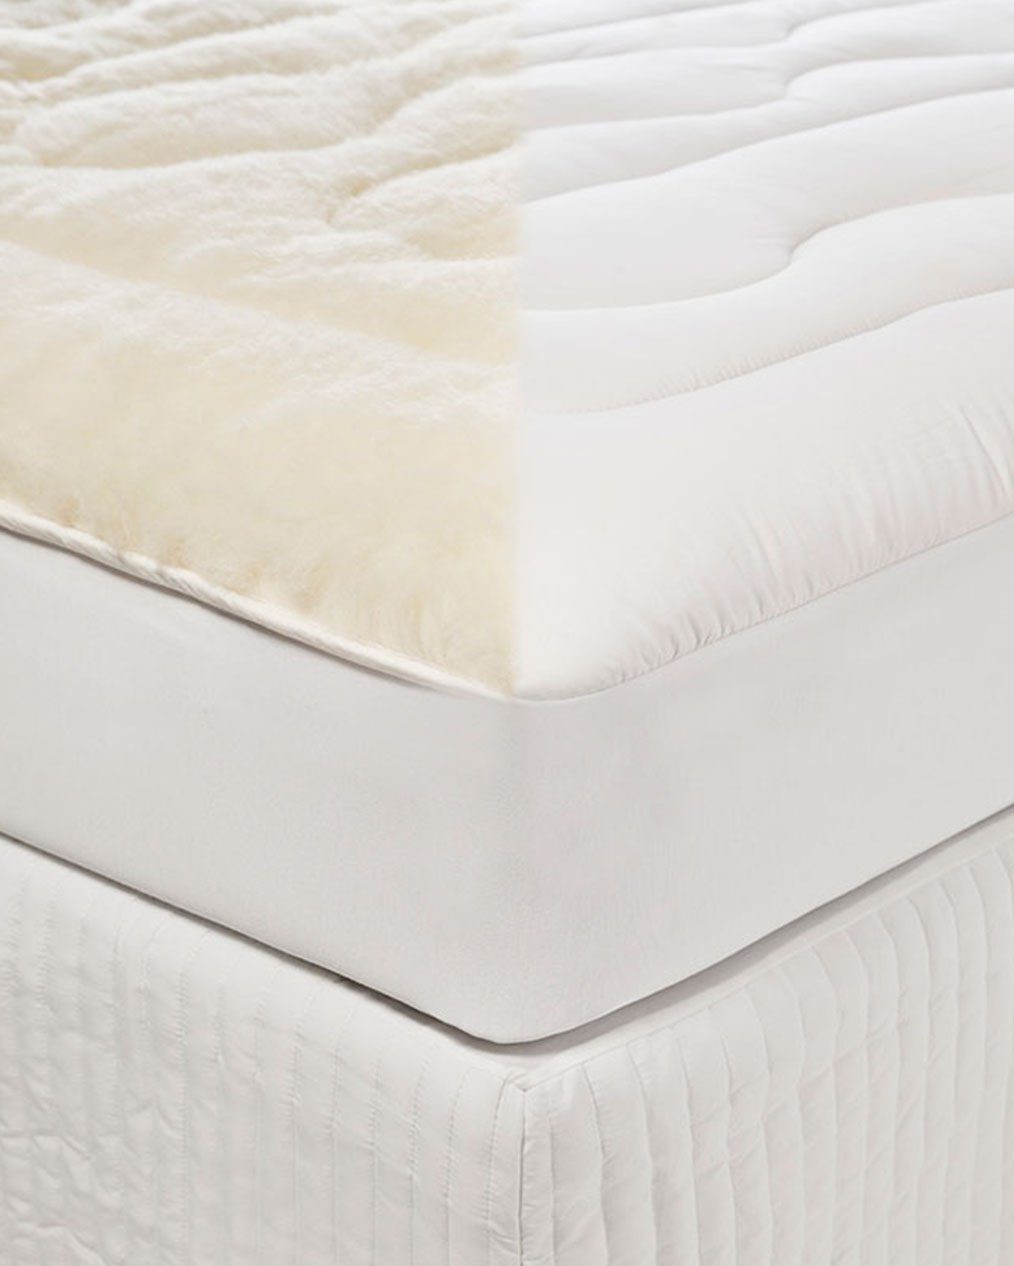 MiniJumbuk Sleep Therapy Mattress Topper - On Bed